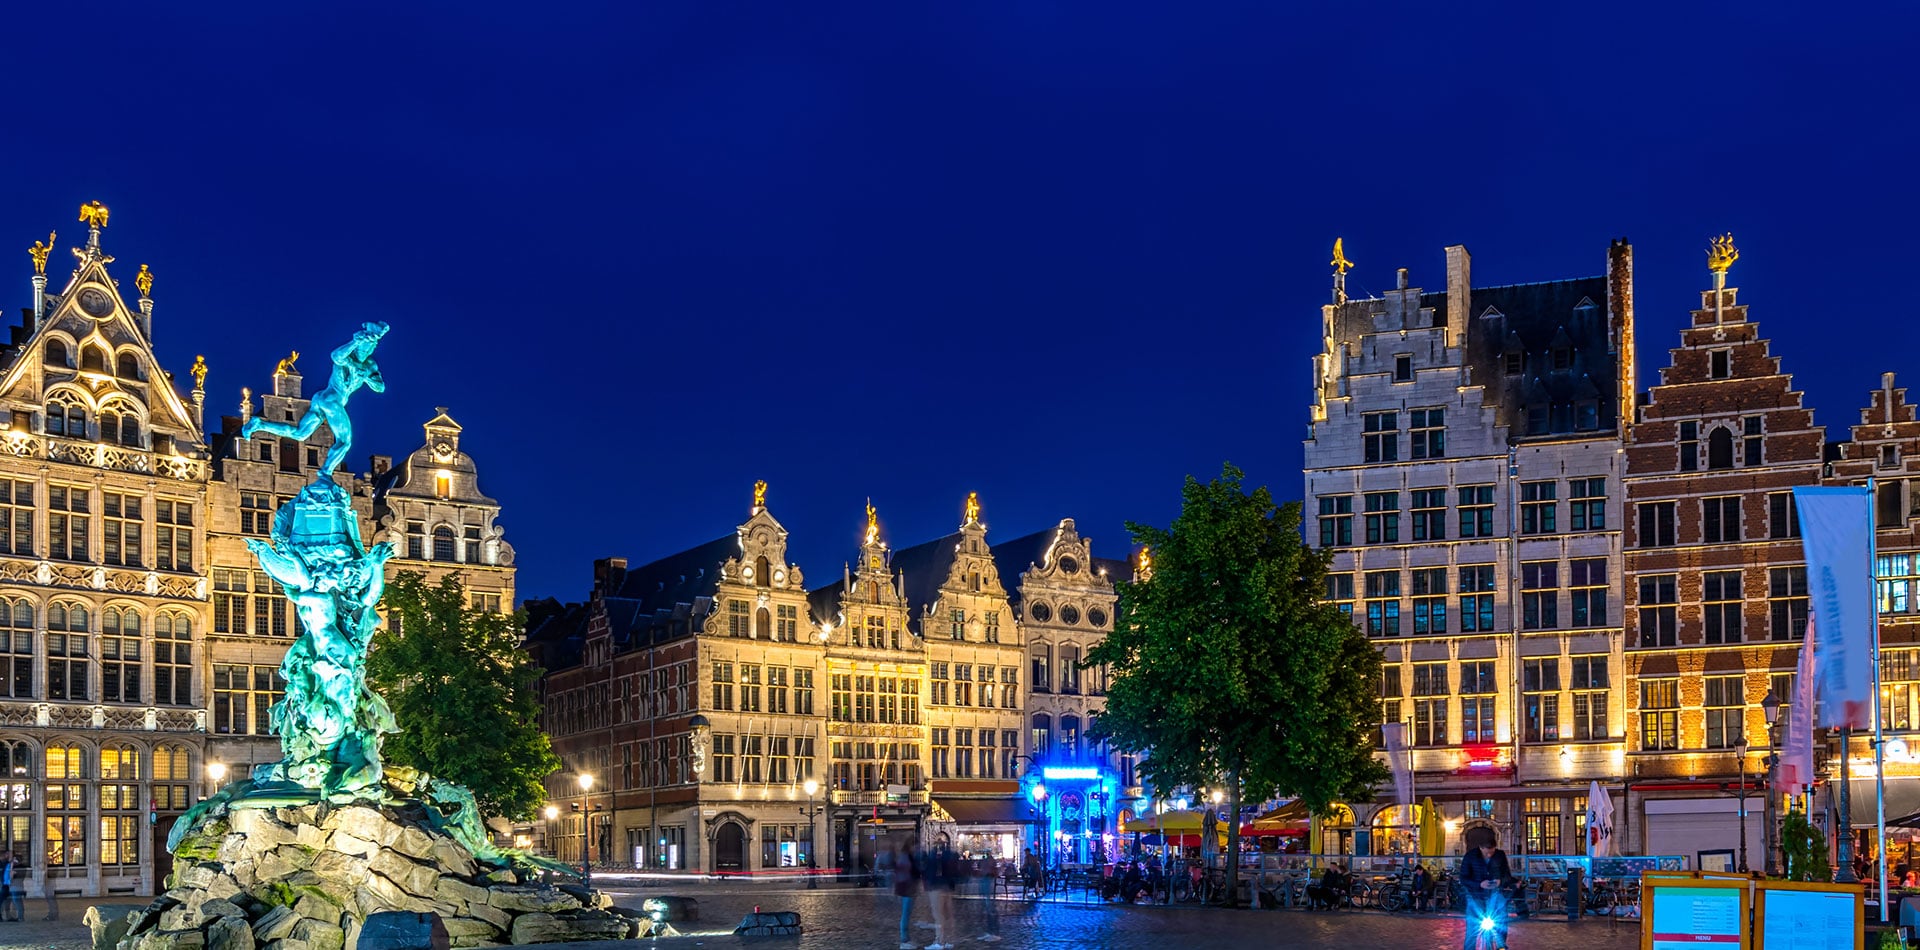 The Great market square in Antwerp, Belgium